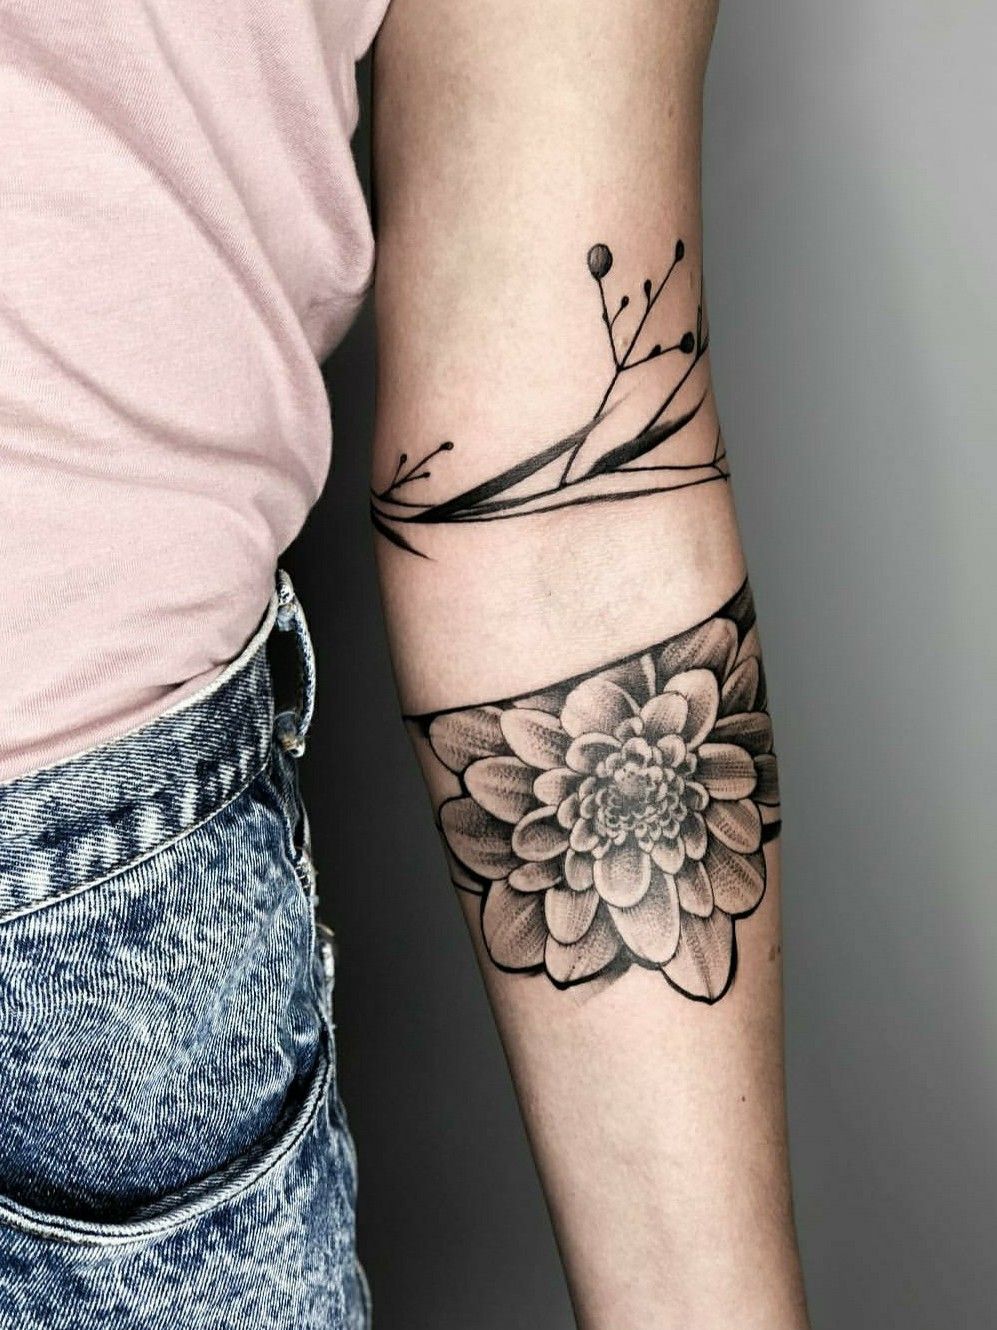 Floral armband tattoo